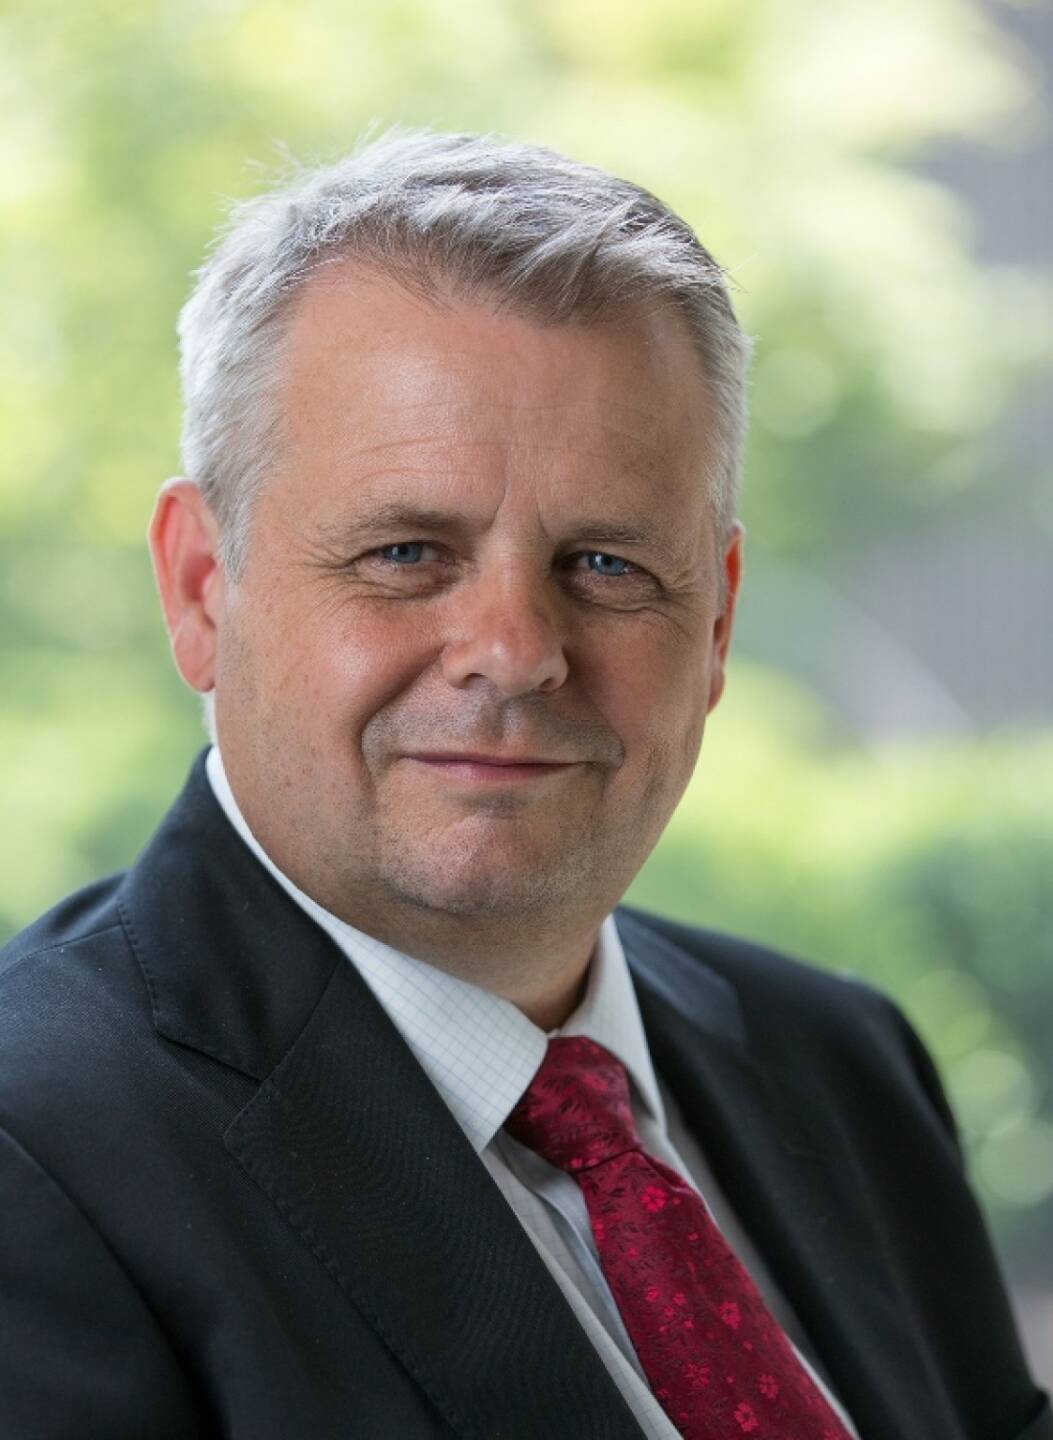 Lars Skovgaard Andersen, Senior Investmentstratege bei der Danske Bank, Bild: Danske Bank